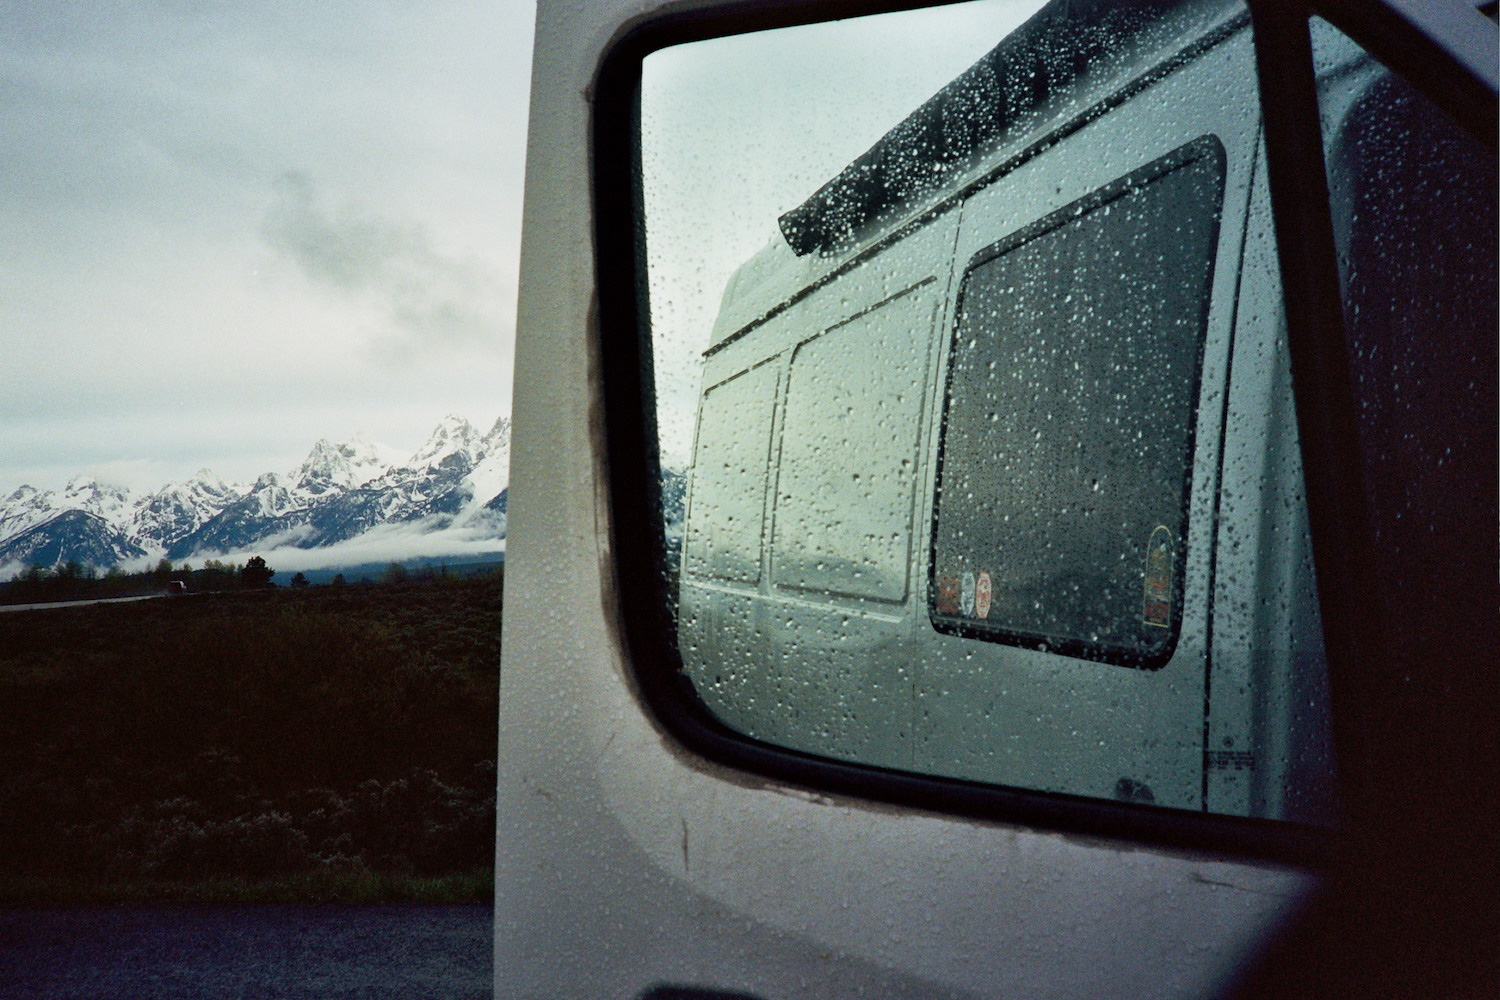 Gale's van in Grand Teton National Park